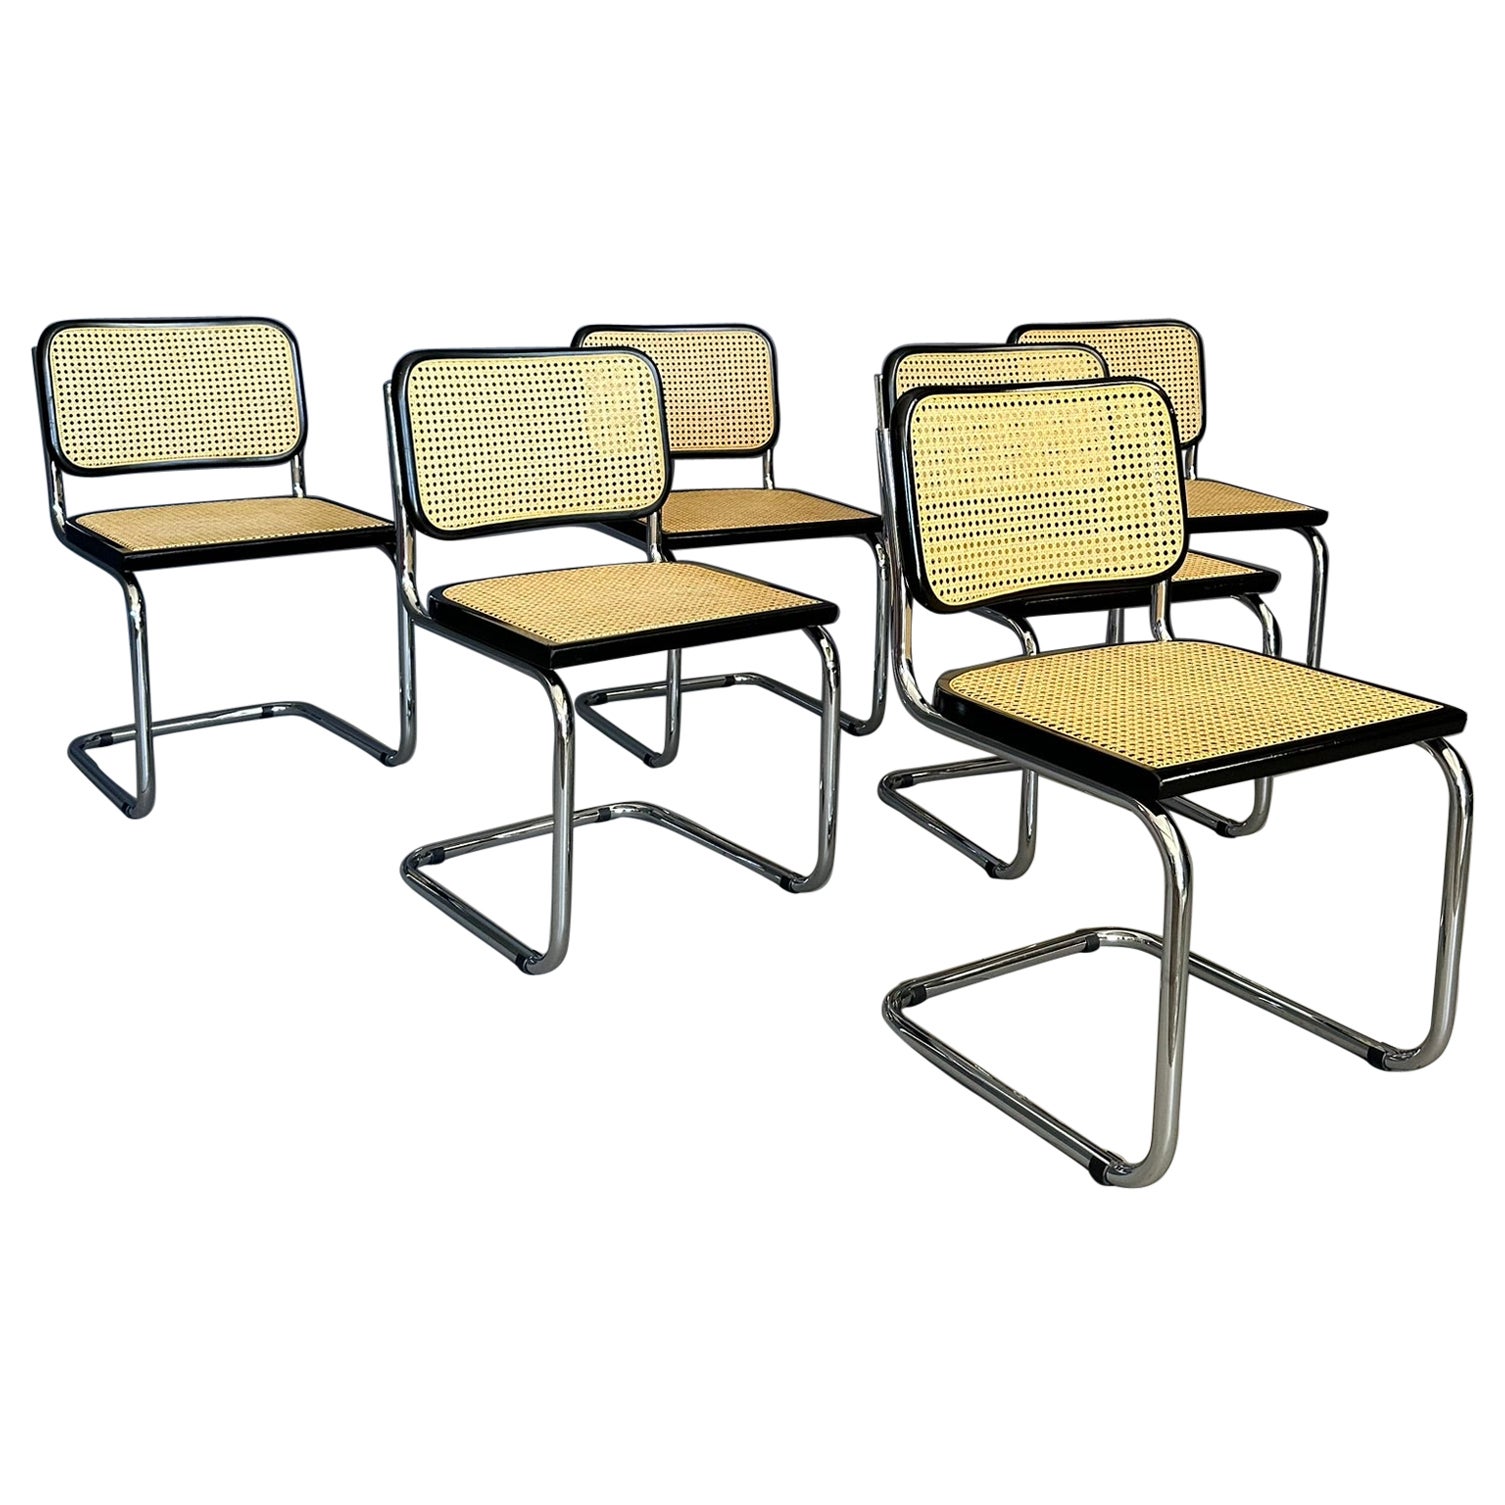 Set of 6 CESCA chairs, model B32, design by Marcel Breuer for Gavina 1970